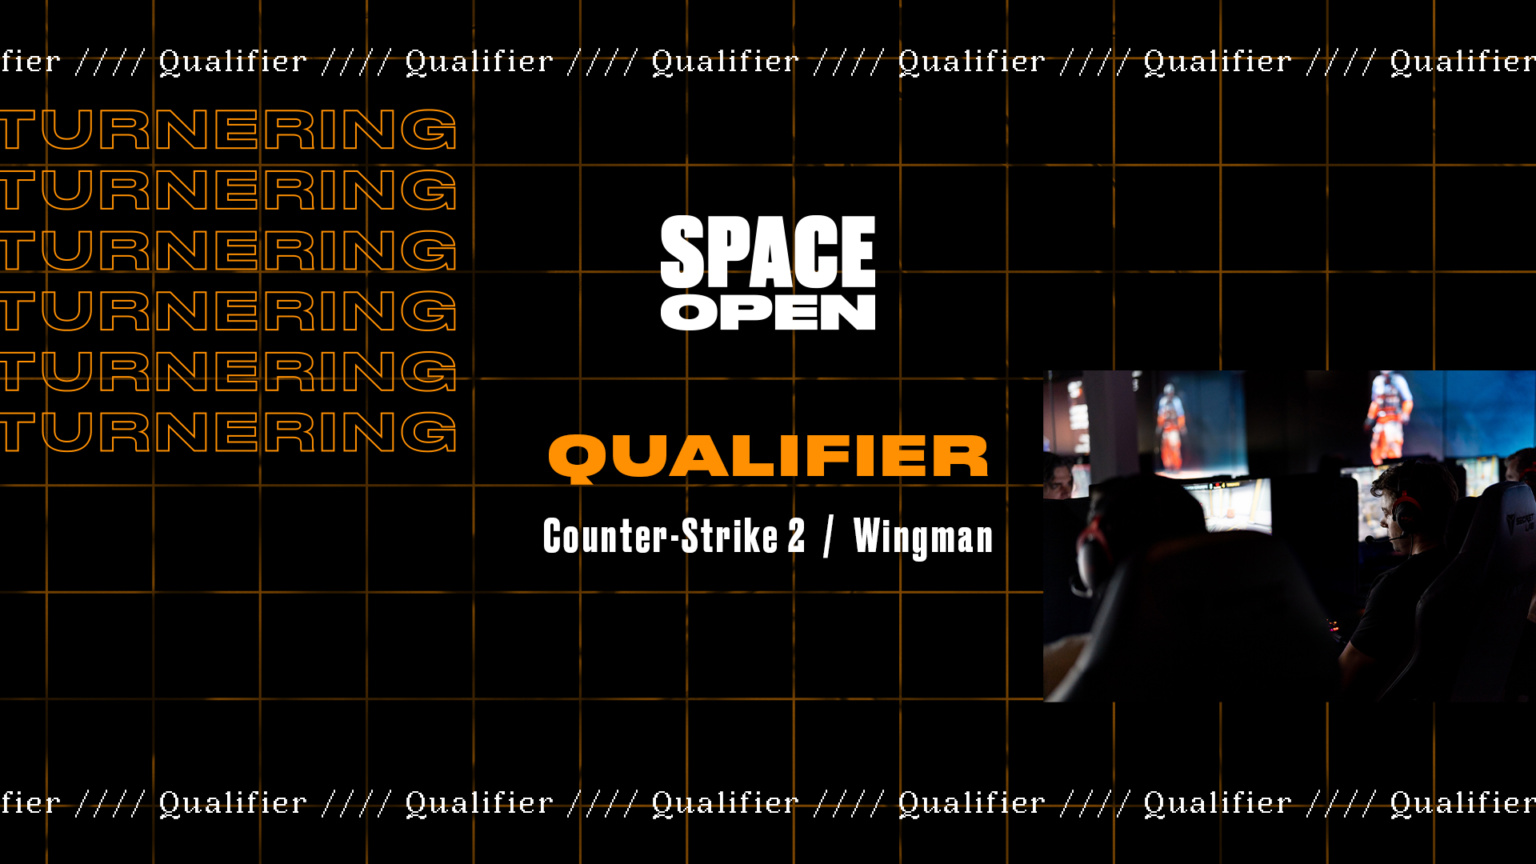 SPACE_Open-Qualifier-1920x1080px_Website